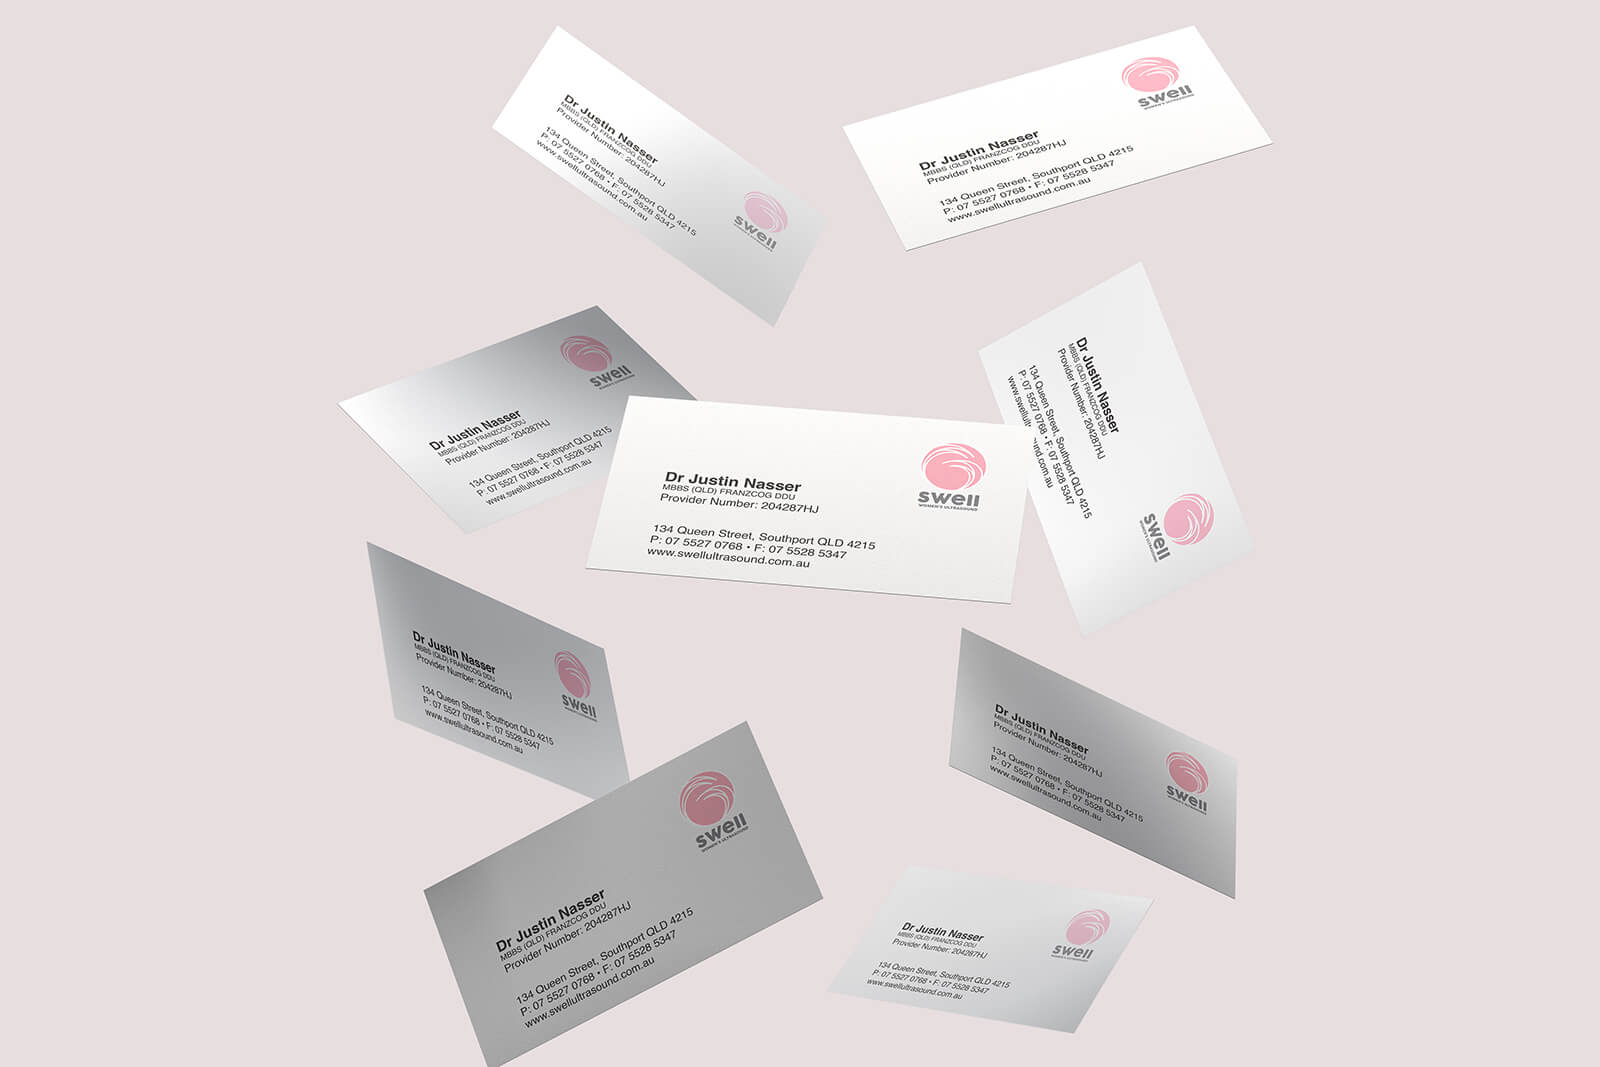 business cards, stationery graphic design service for clinic by freelance designer metrodesign bexley kogarah sydney